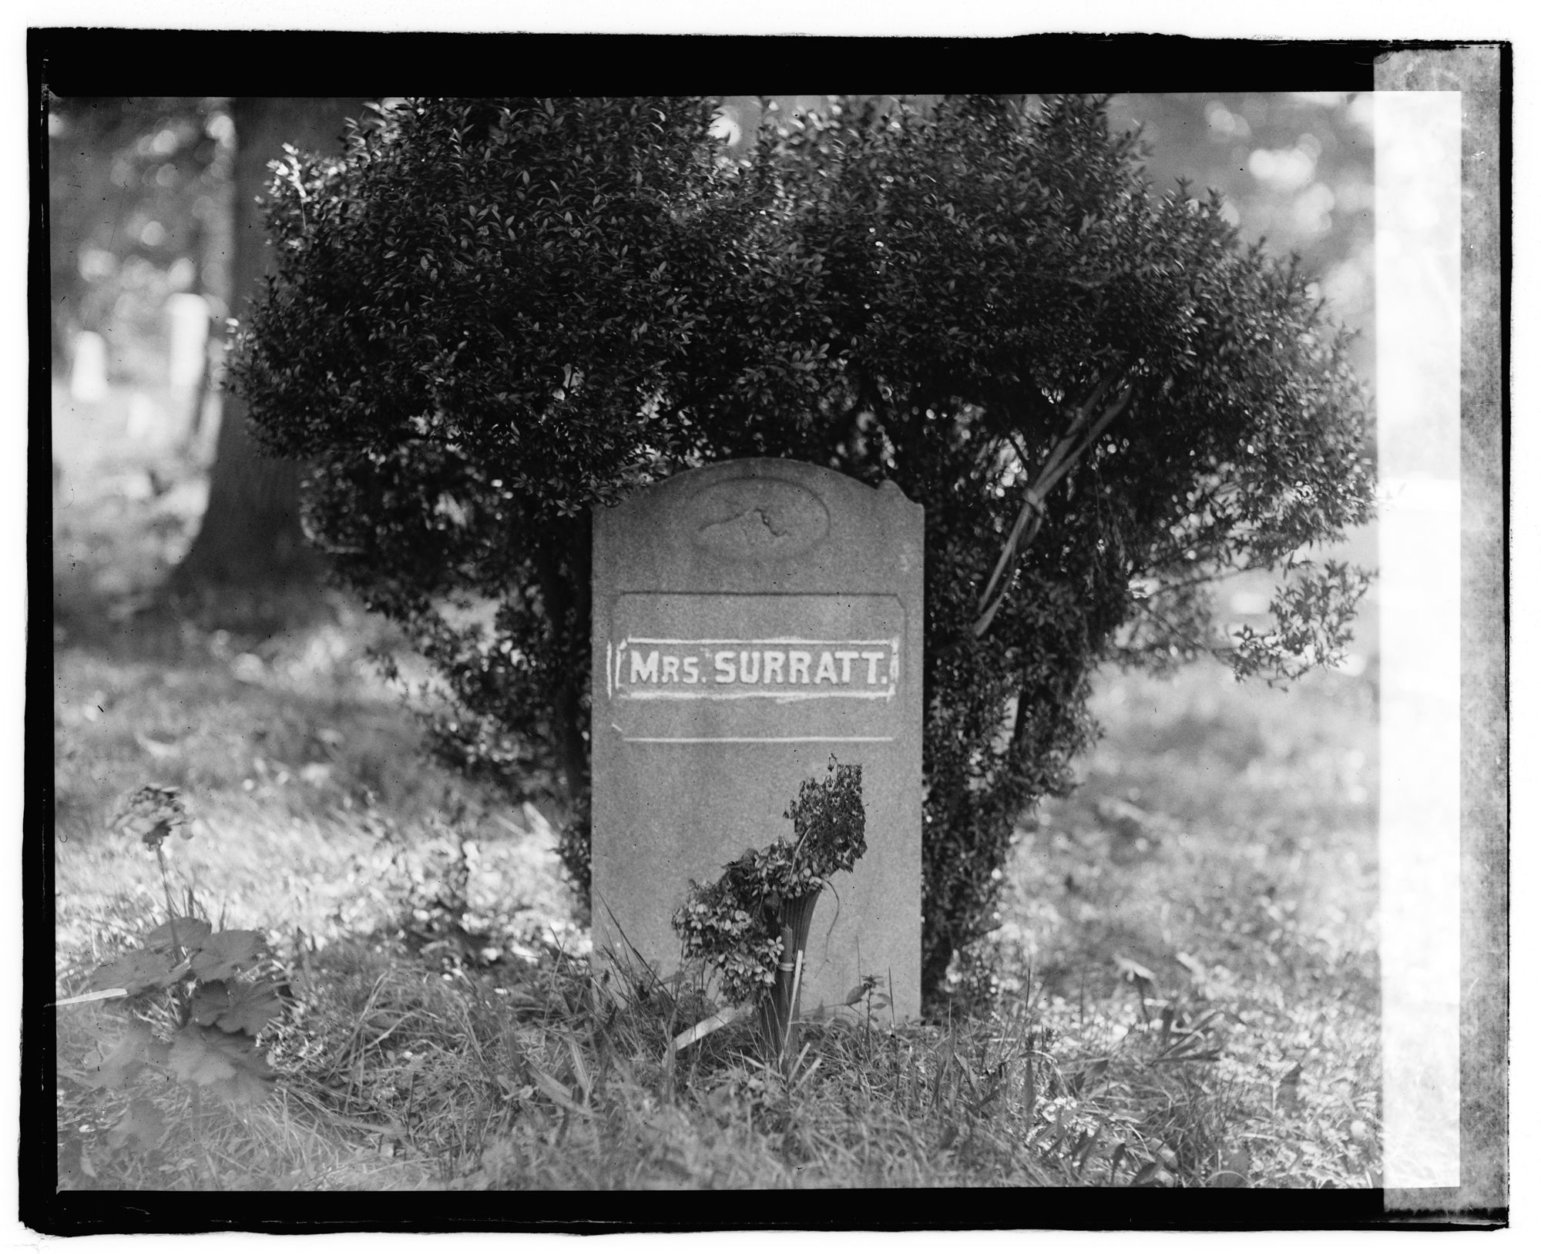 Lincoln assassination conspirator Mary Surratt's grave circa 1918. (Courtesy Library of Congress)